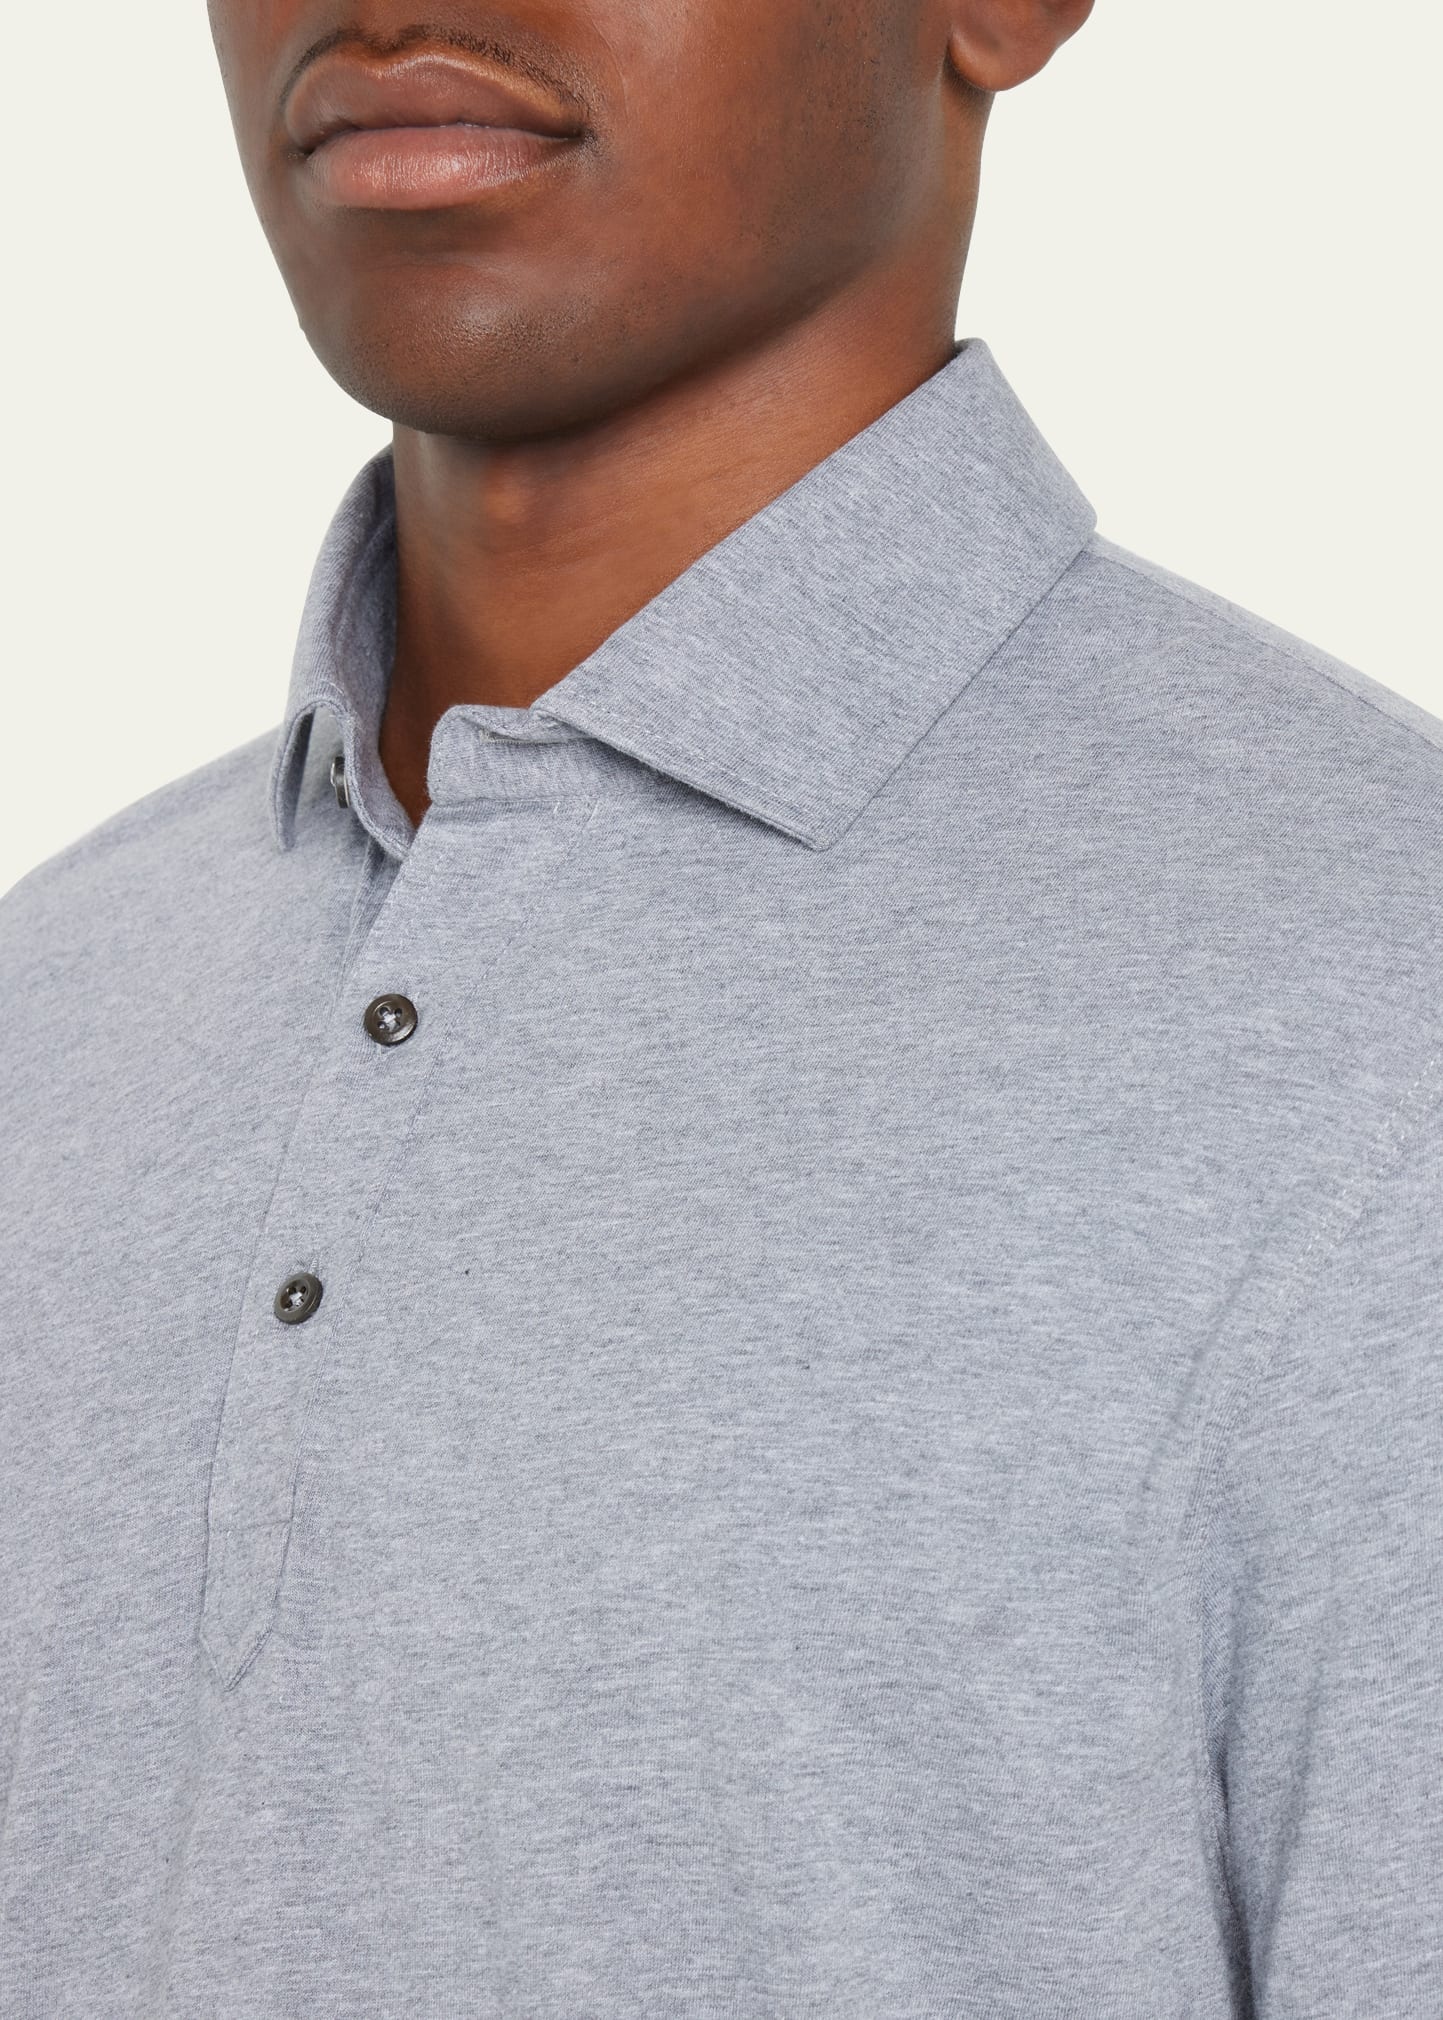 Men's Jersey Polo Shirt - 5